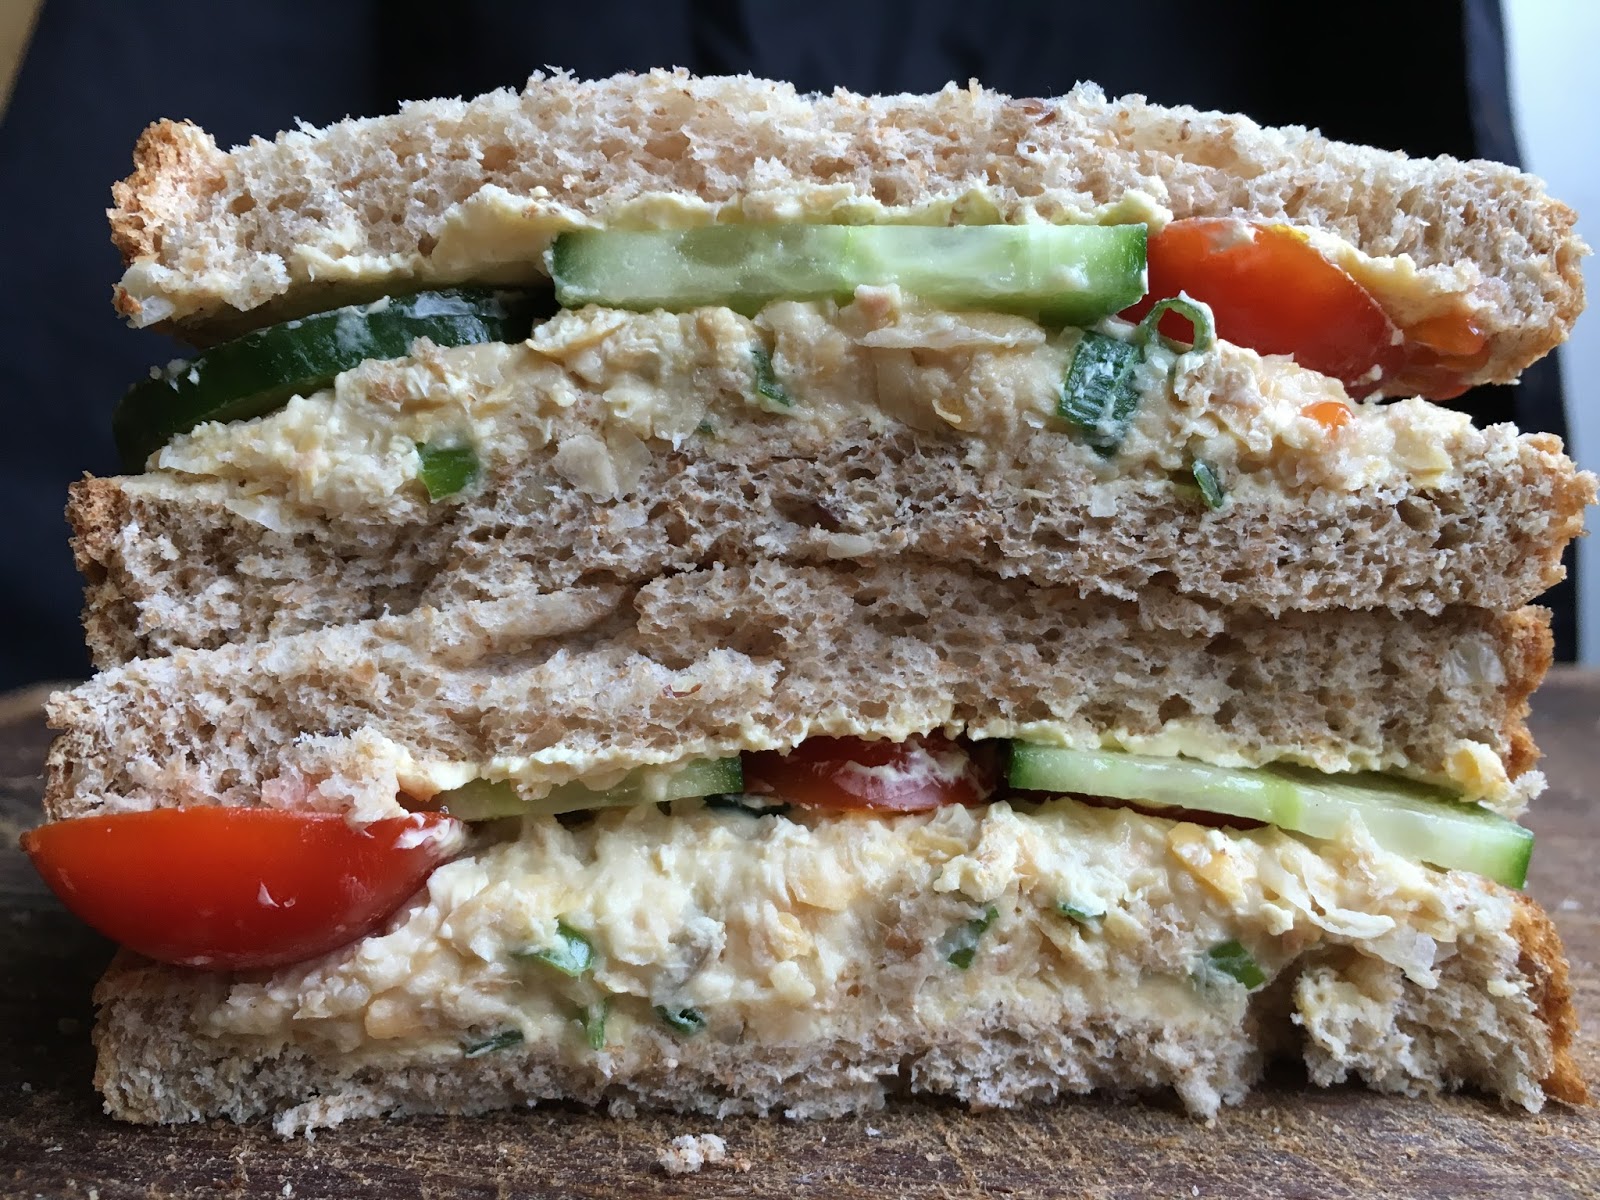 Vegan Chickpea "Tuna" Mayo Sandwich